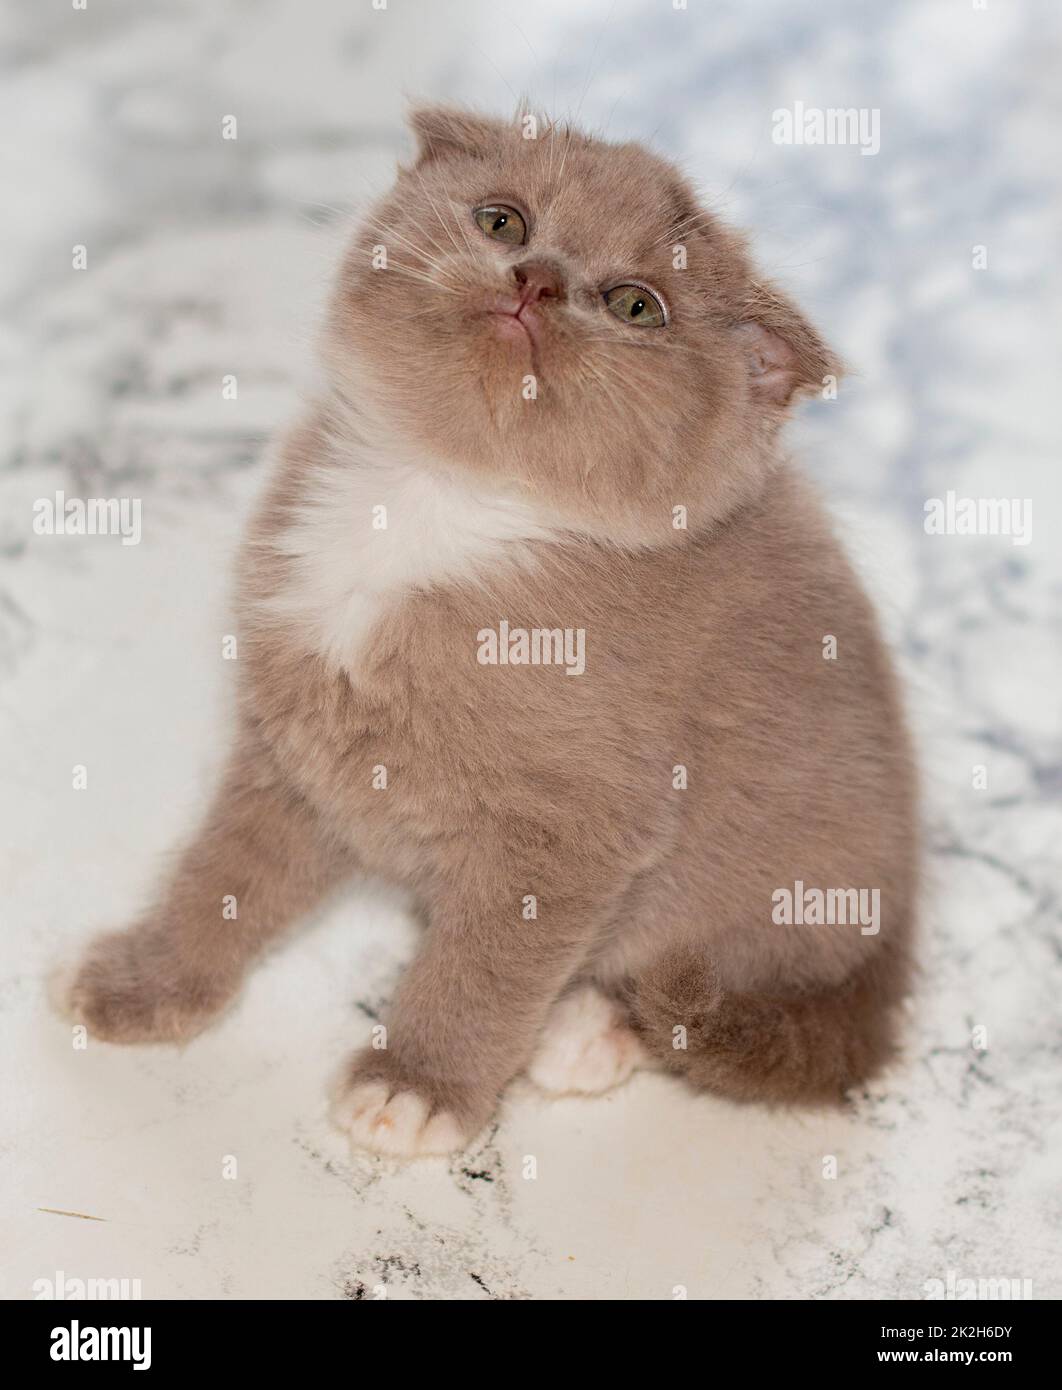 Scottish kitten sitting on a marble background Stock Photo